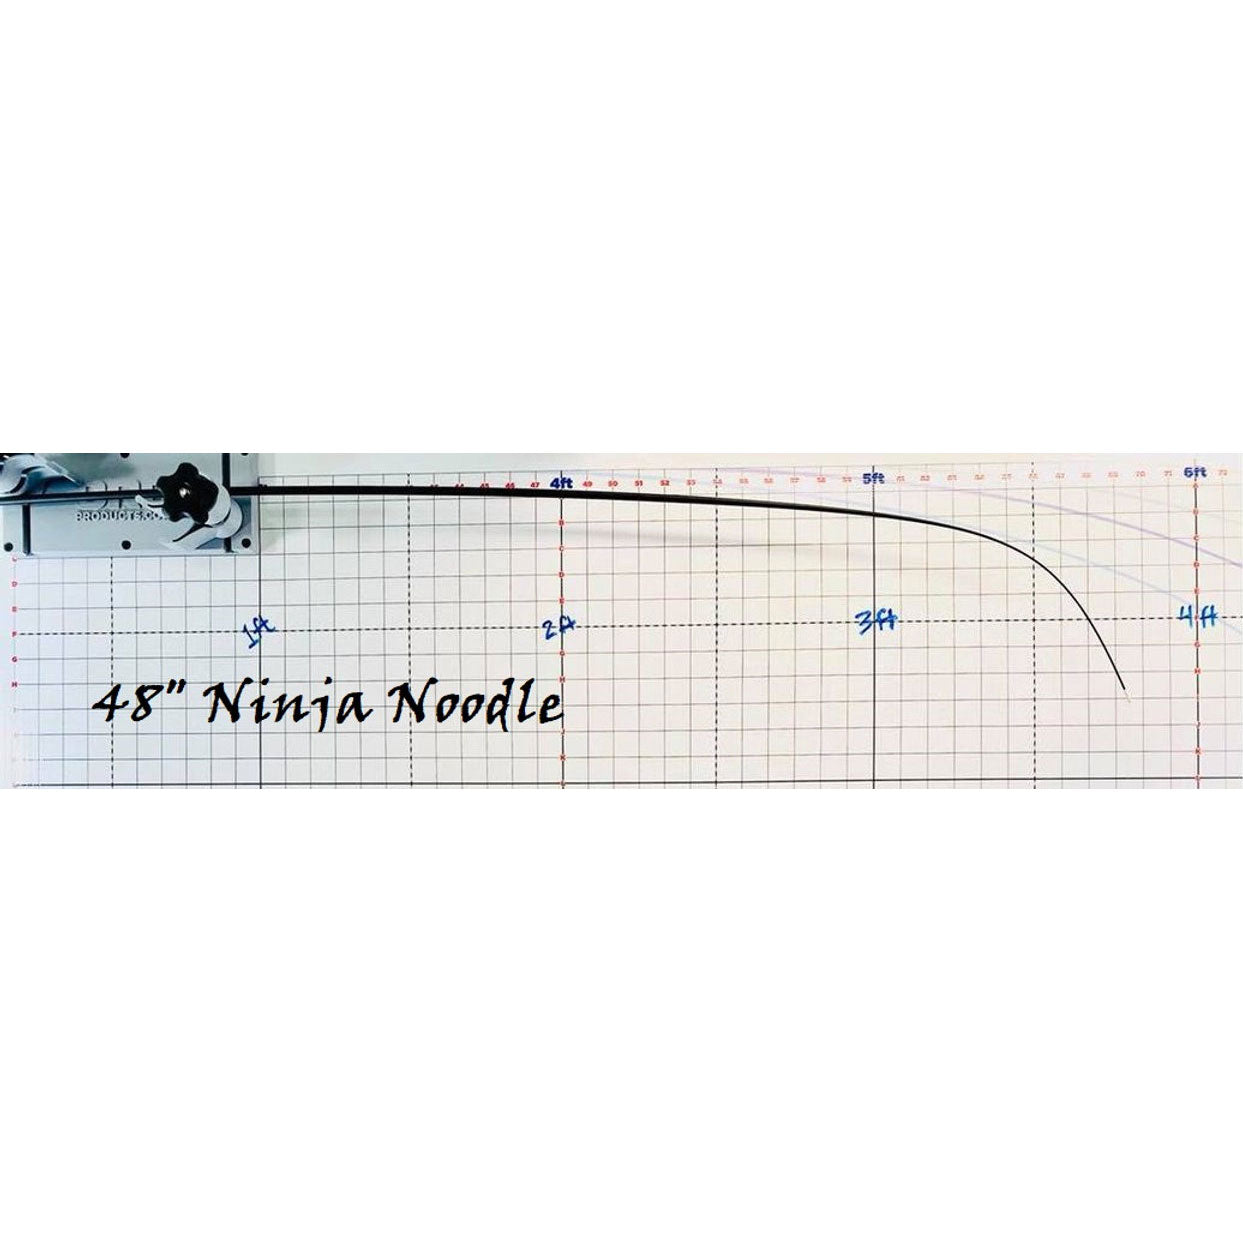 V-Line 48" Ninja Noodle Ice Rod Blank